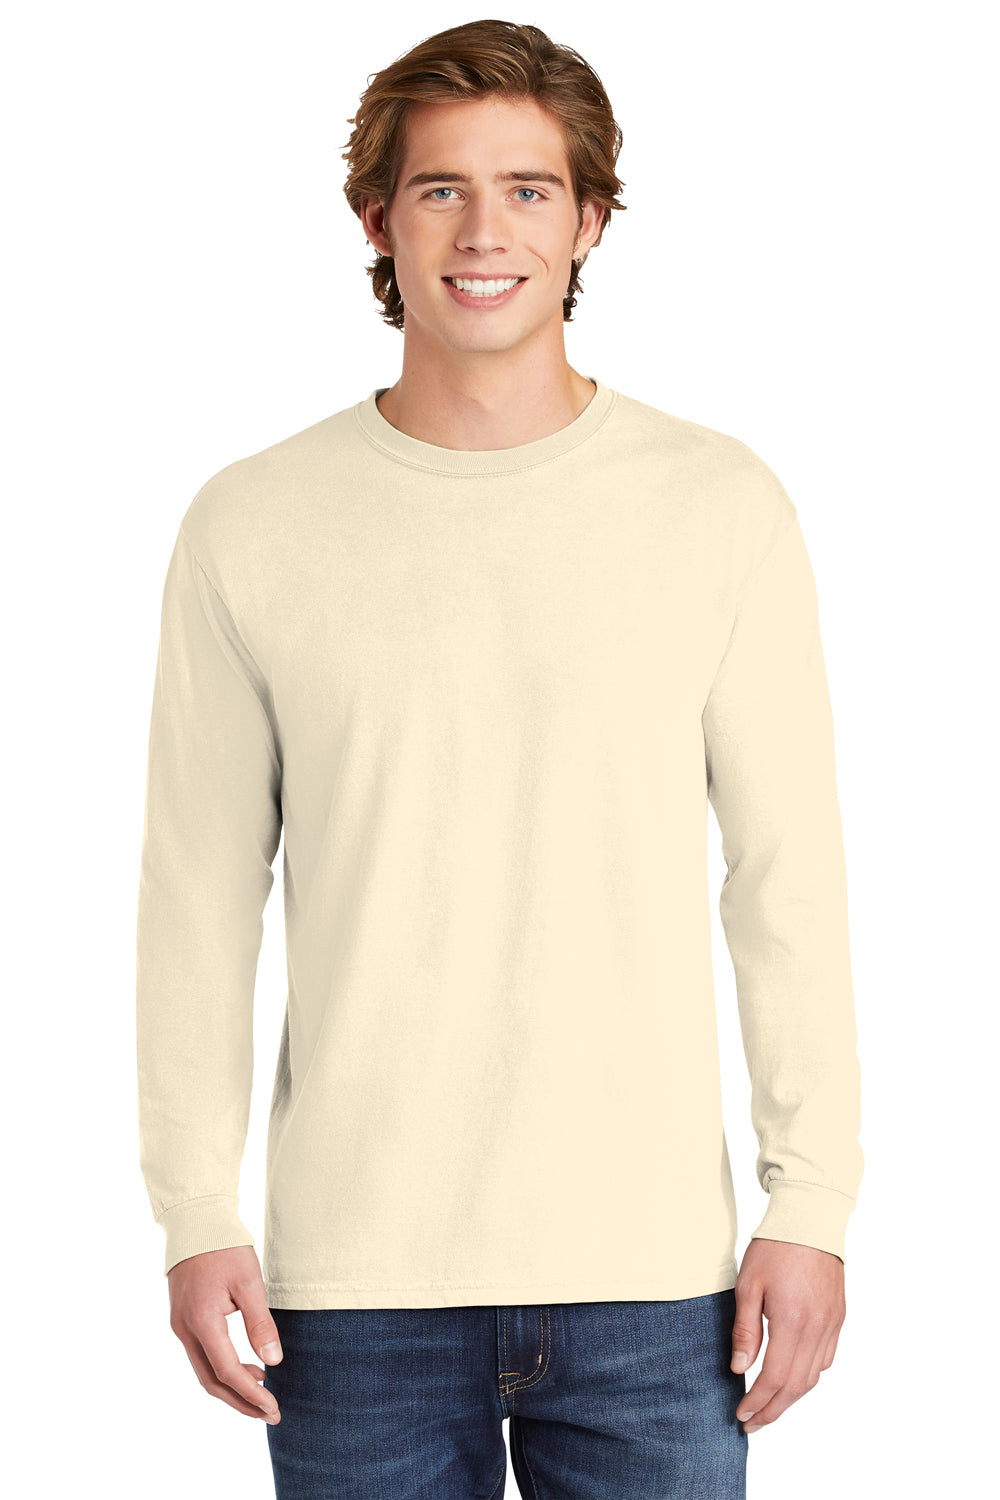 Comfort Colors Mens Long Sleeve Crewneck T-Shirt Ivory Front